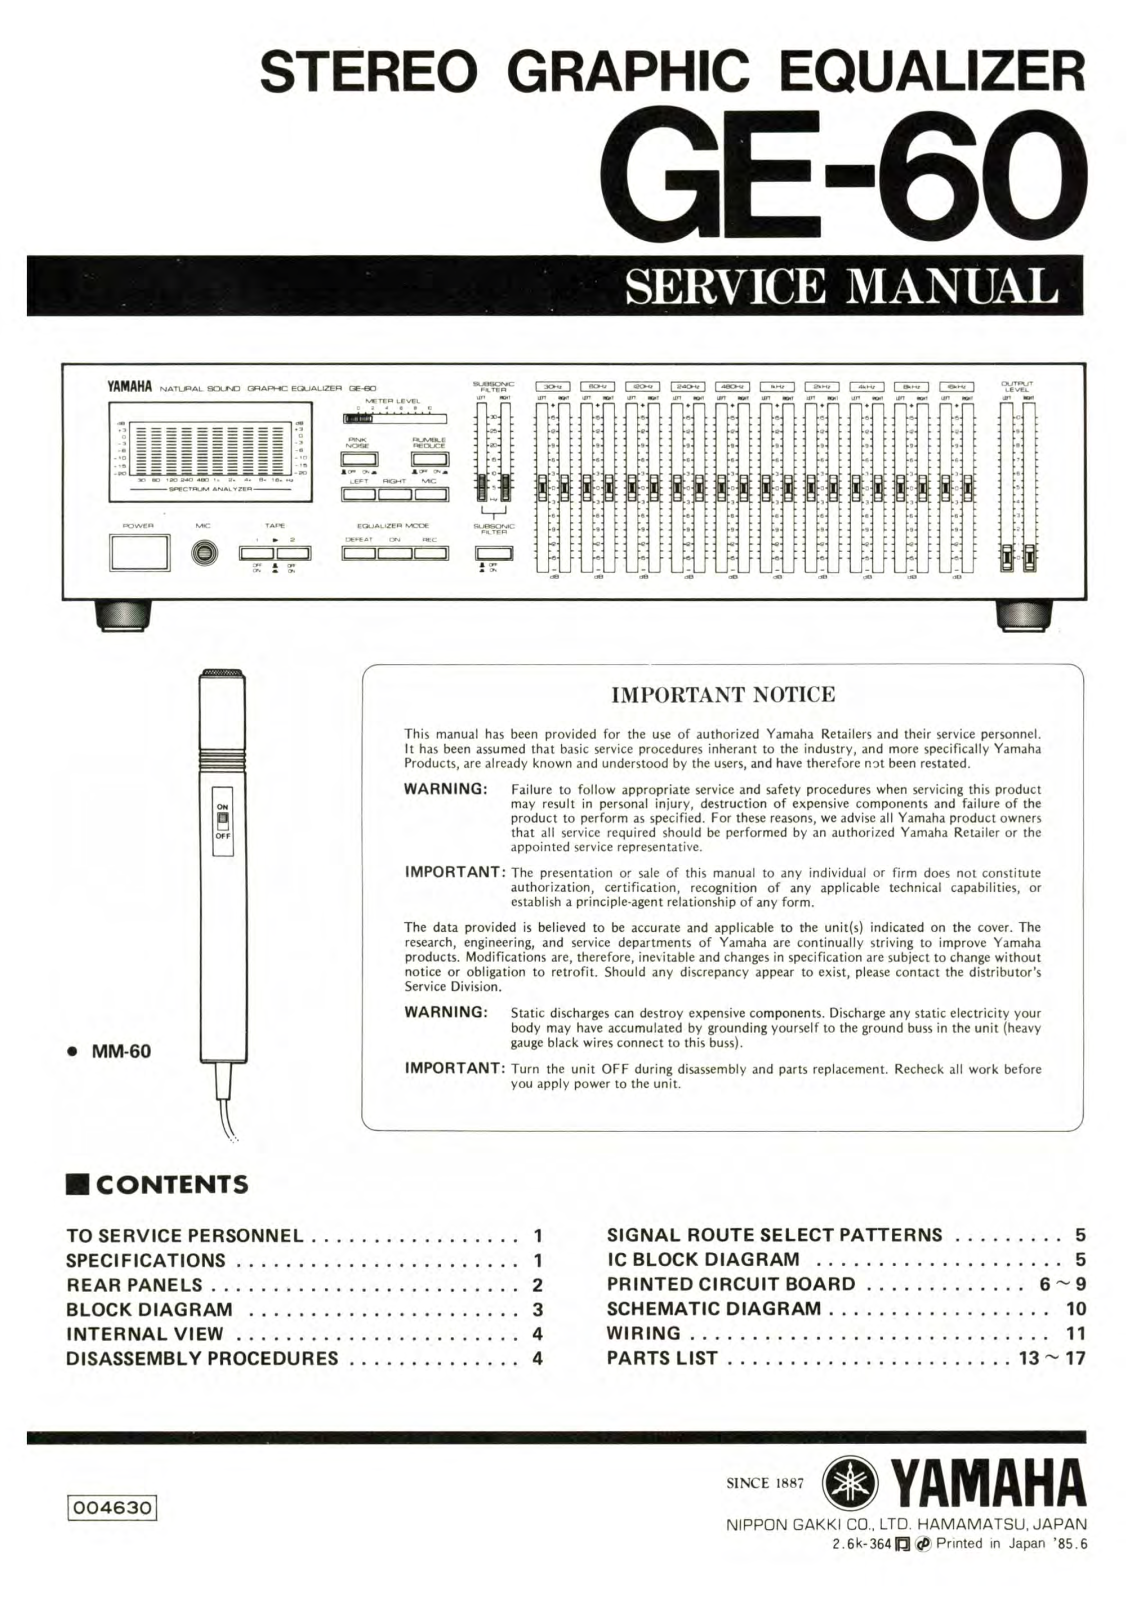 Yamaha GE-60 Service Manual